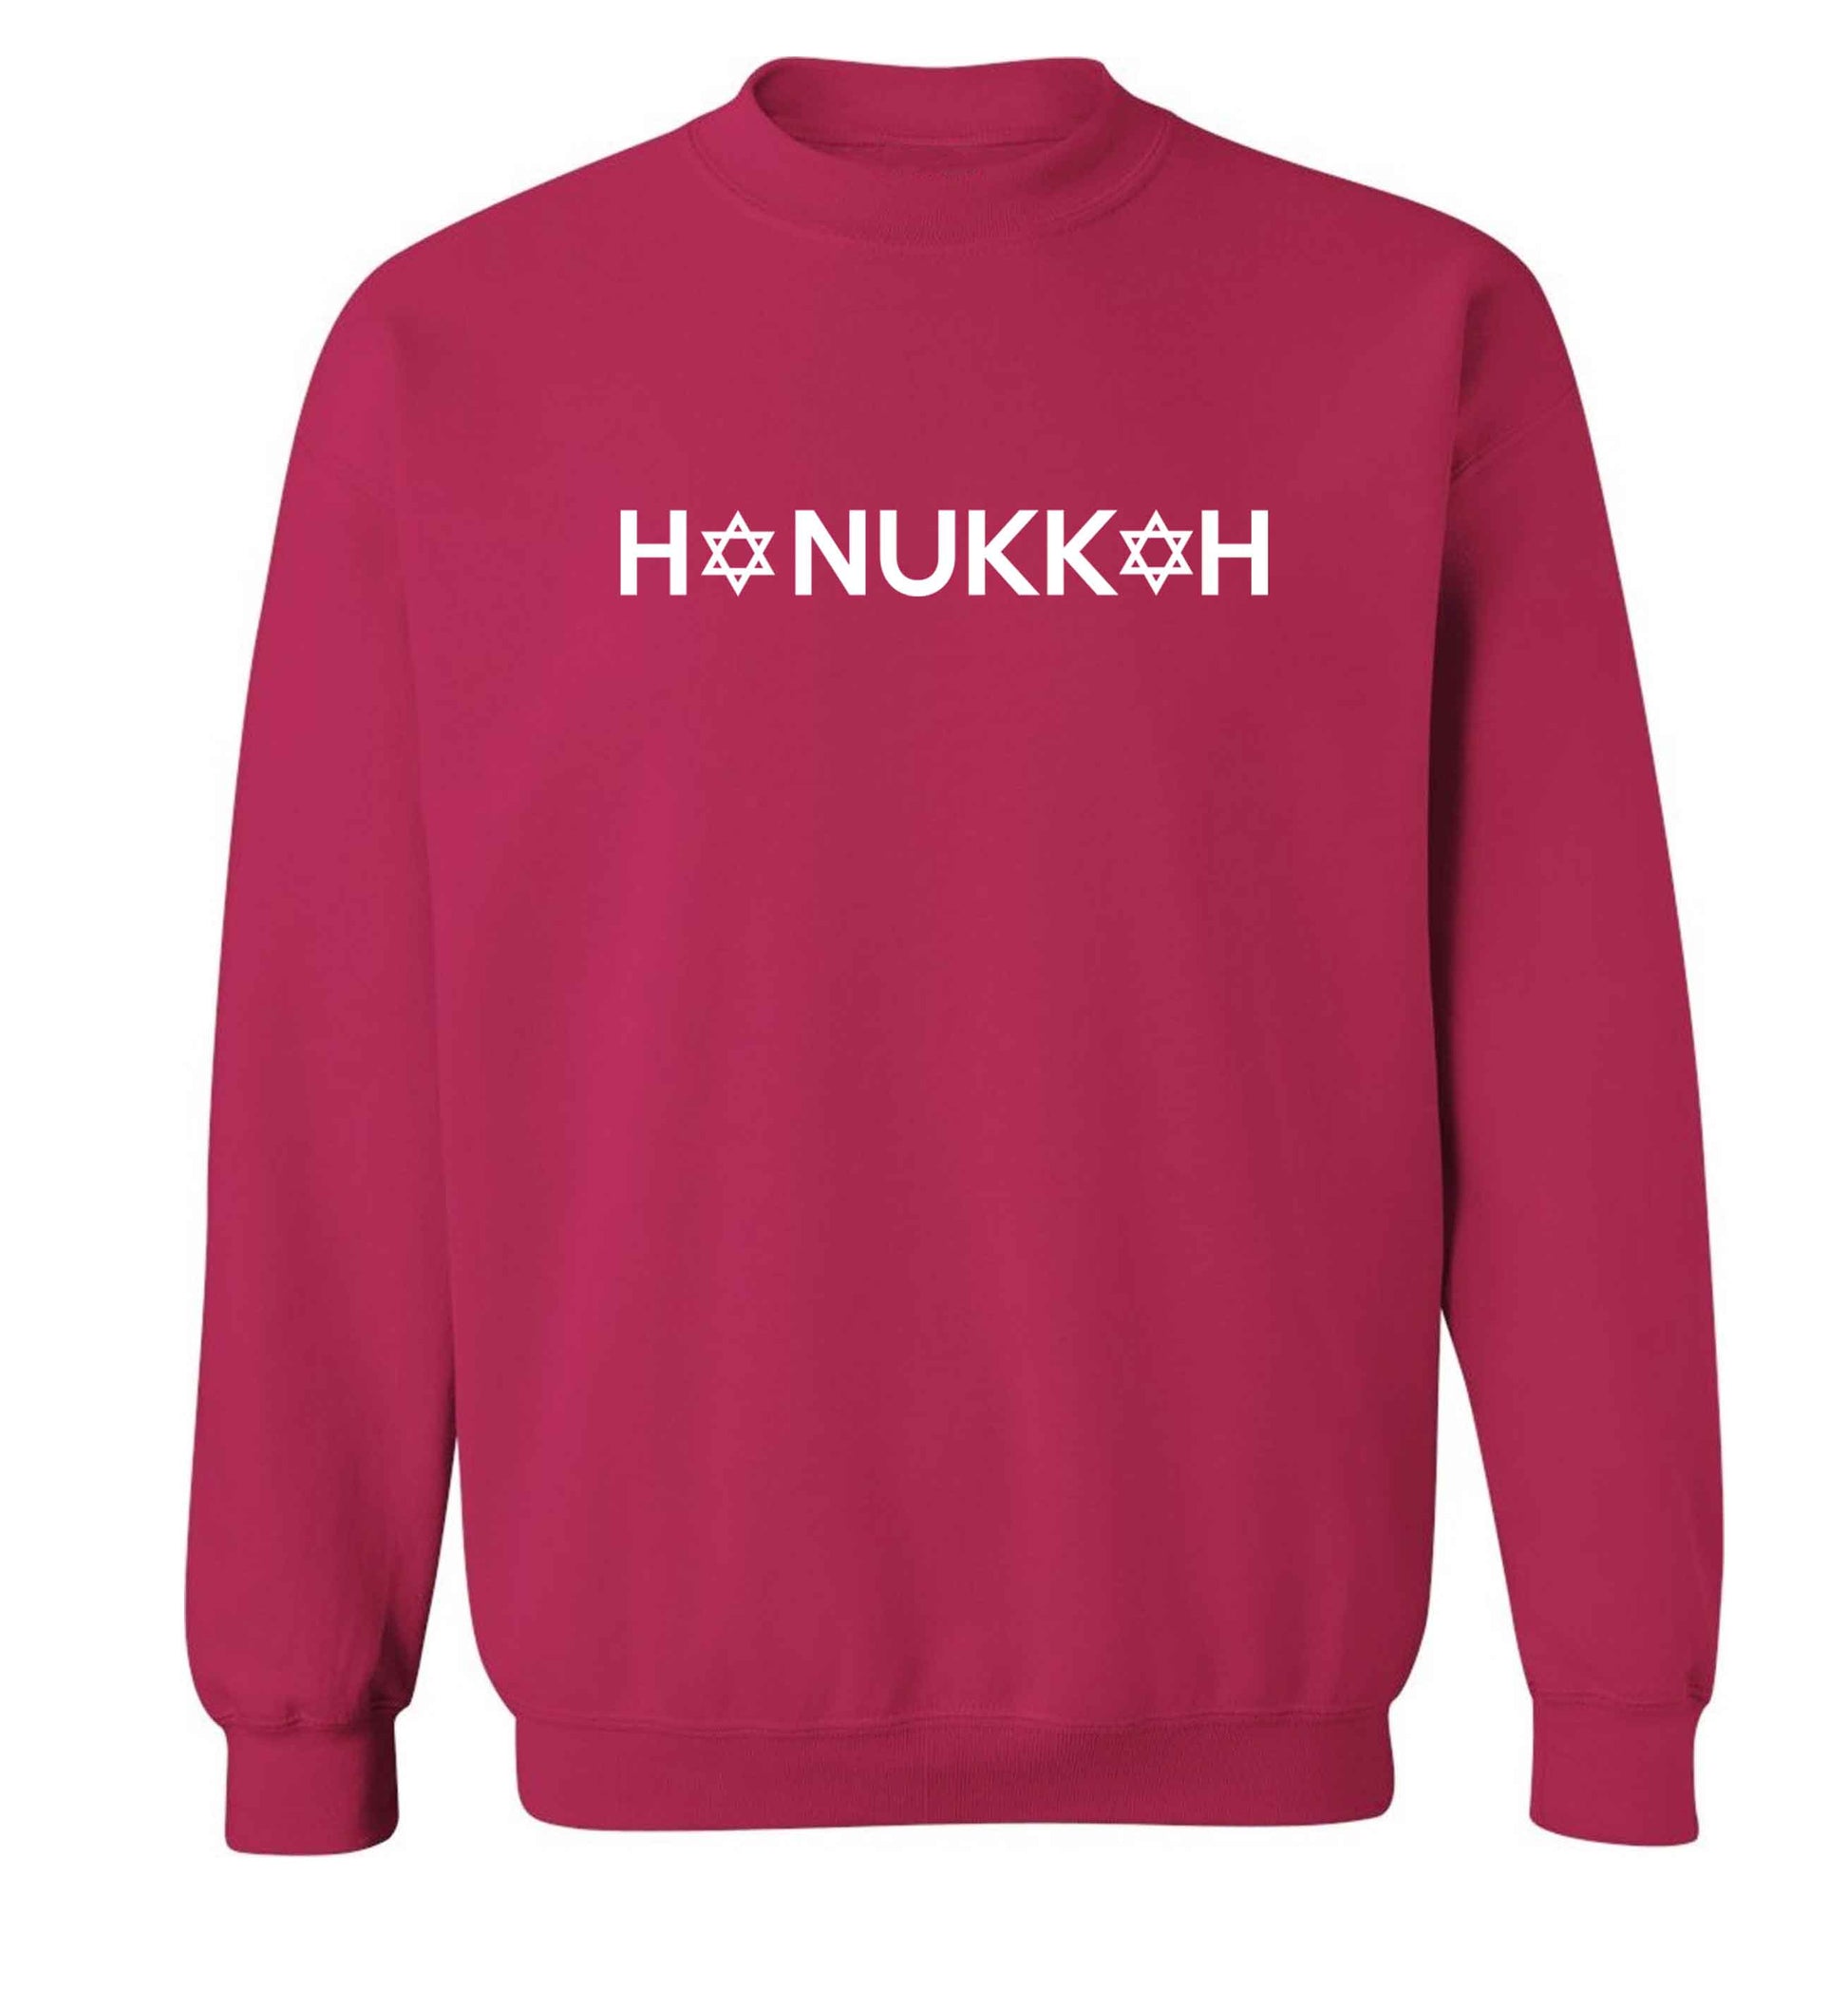 Hanukkah star of david adult's unisex pink sweater 2XL